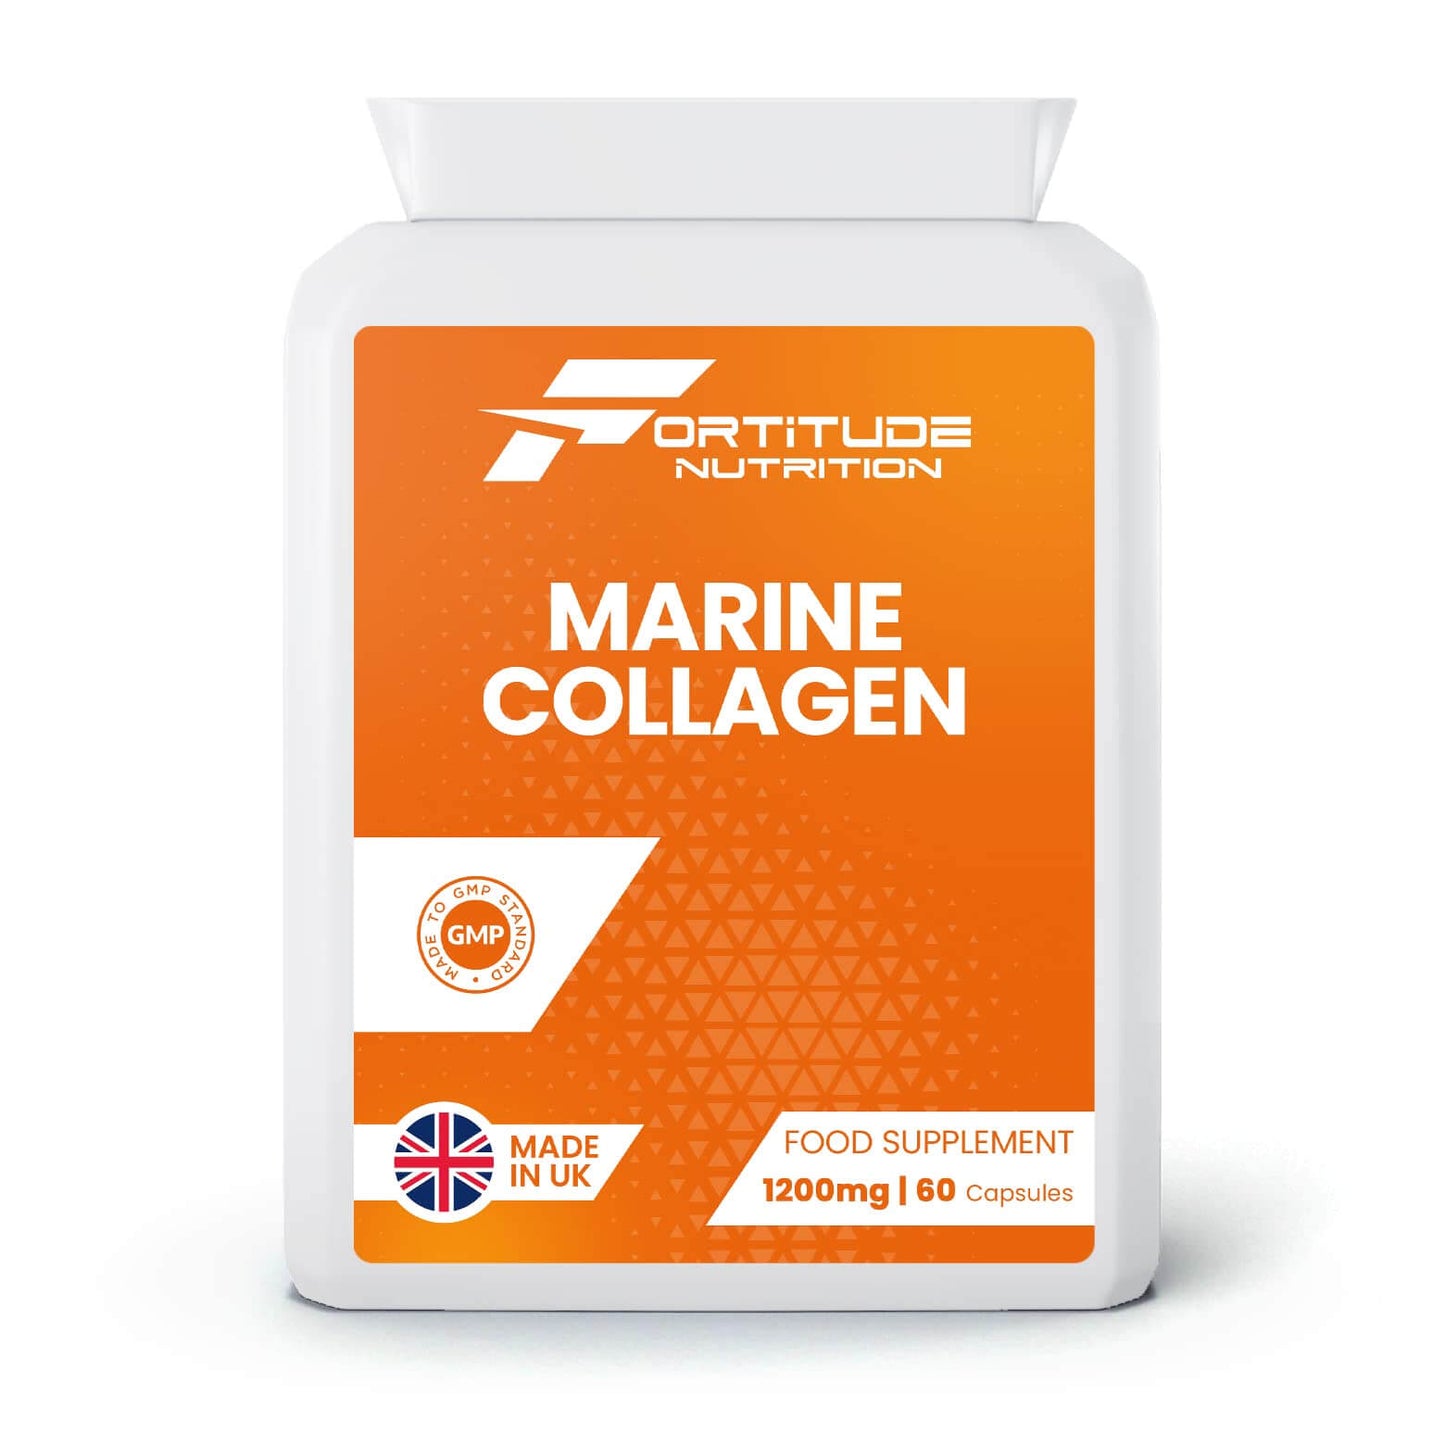 Fortitude Nutrition Marine Collagen